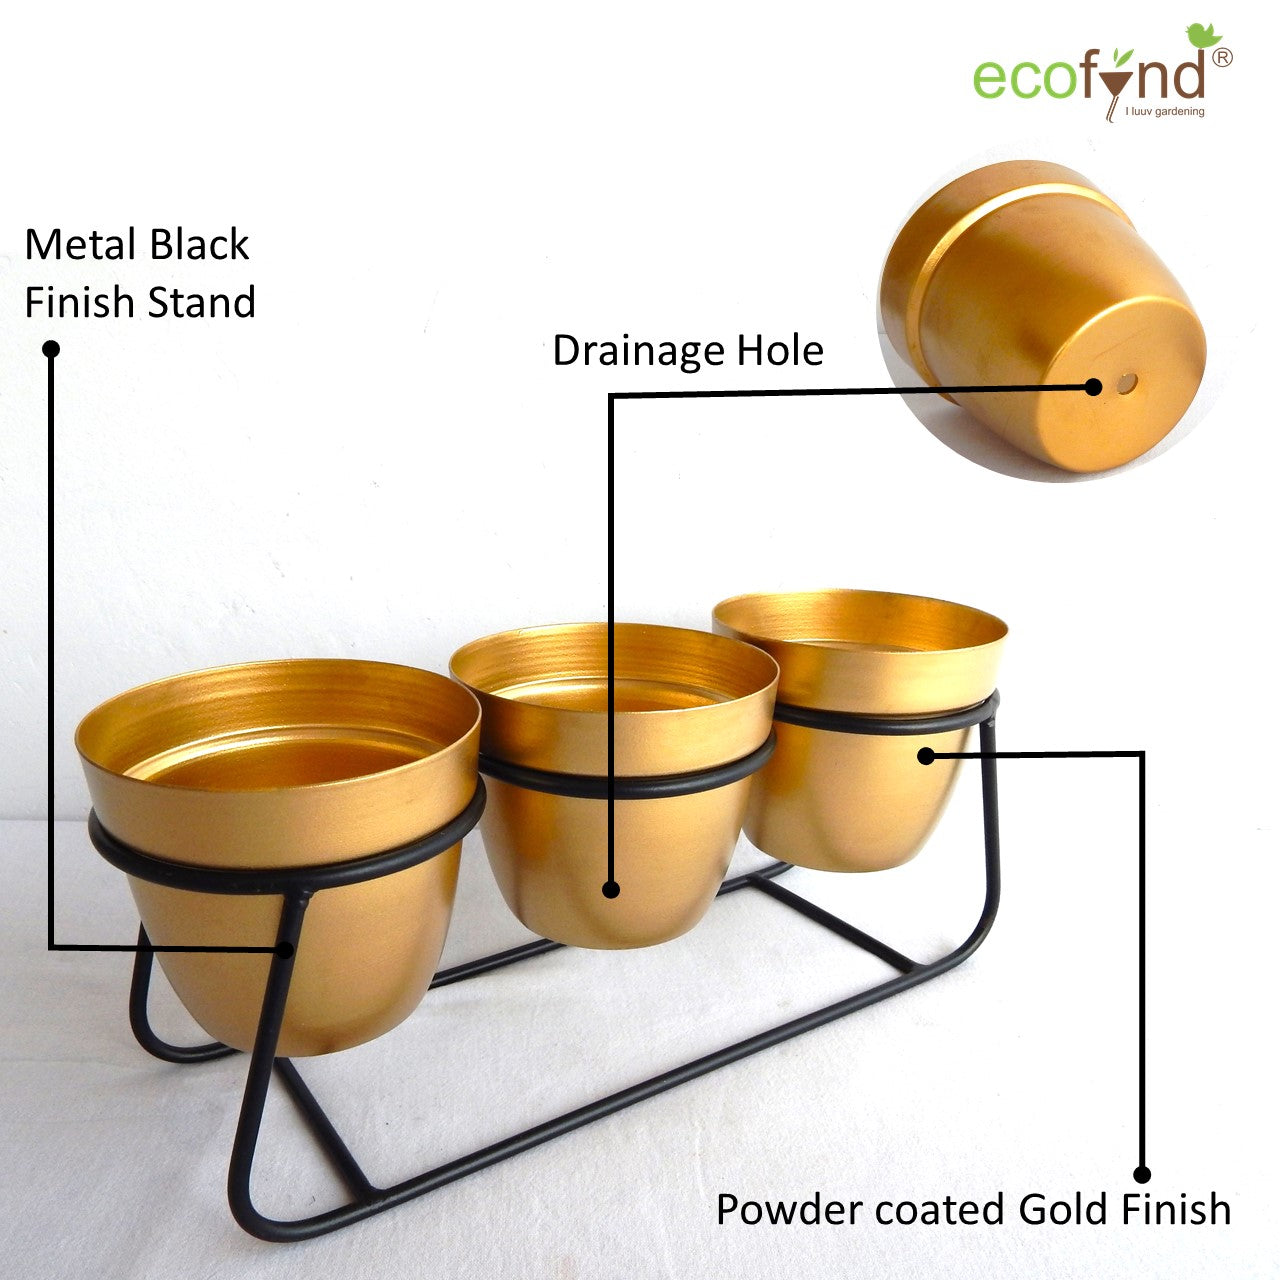 
                  
                    ecofynd Golden Modern Style Planter Set
                  
                